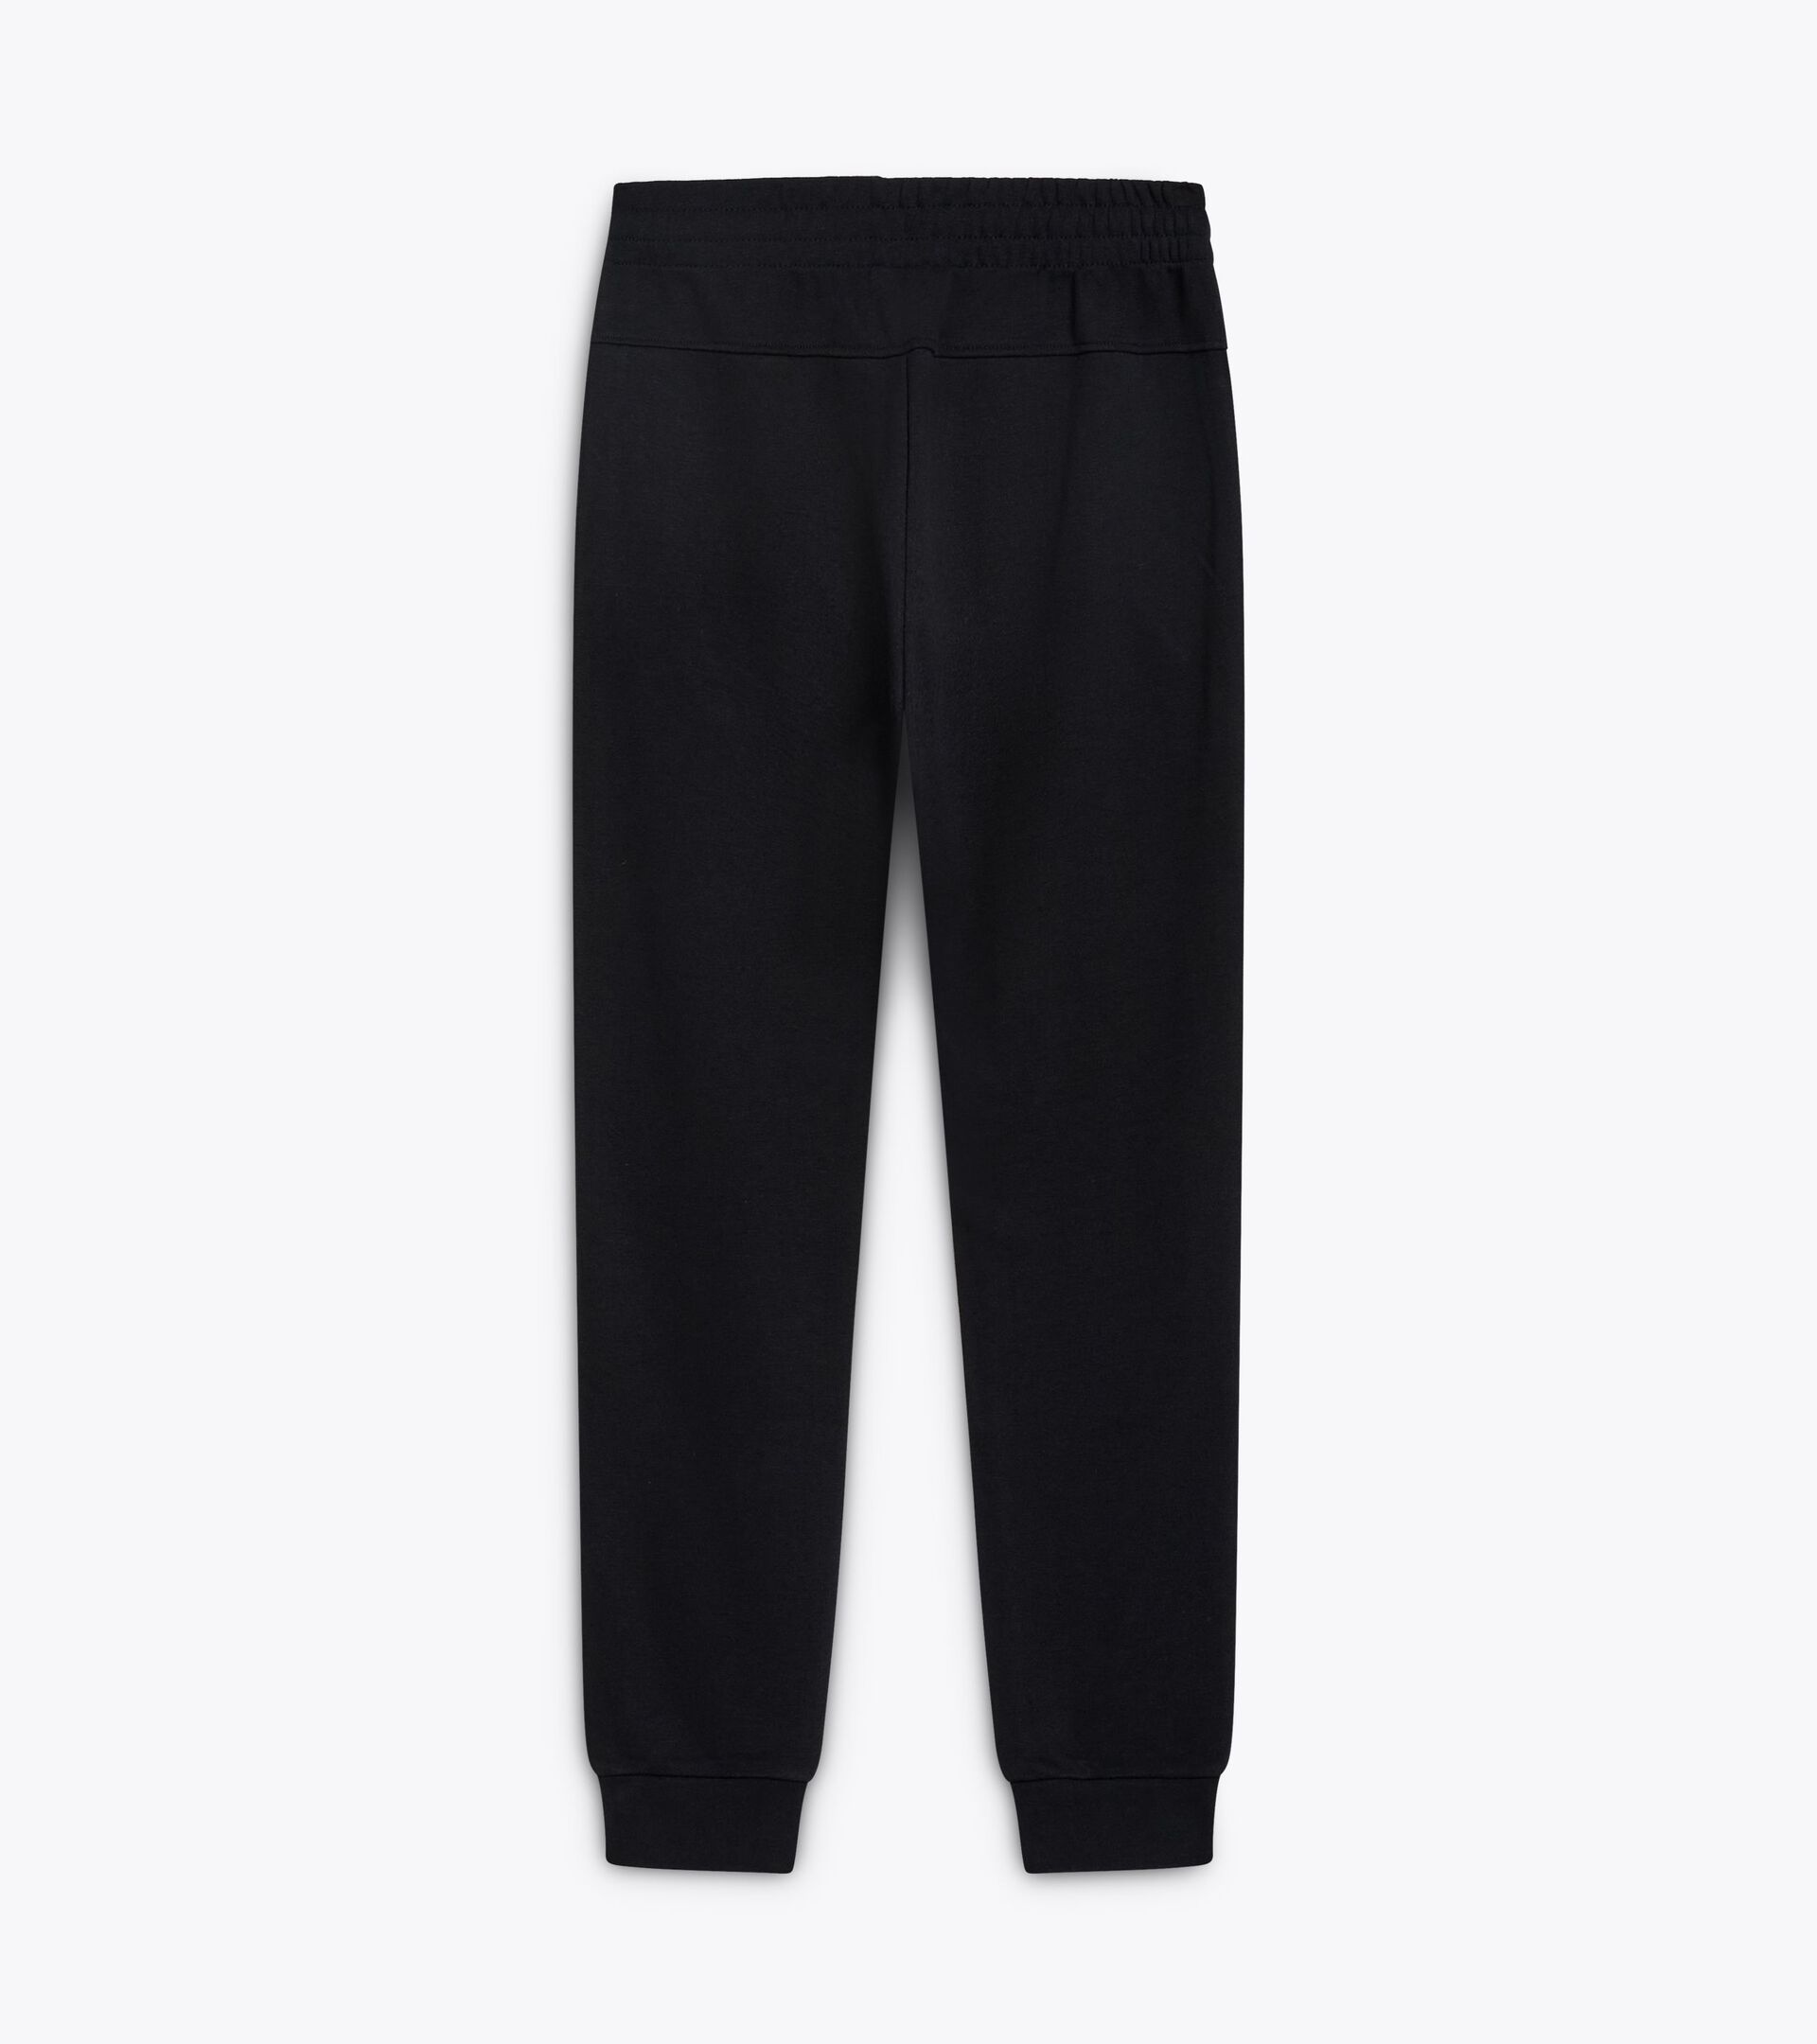 Cotton sweatpants - Men’s
 PANTS CUFF CORE BLACK - Diadora